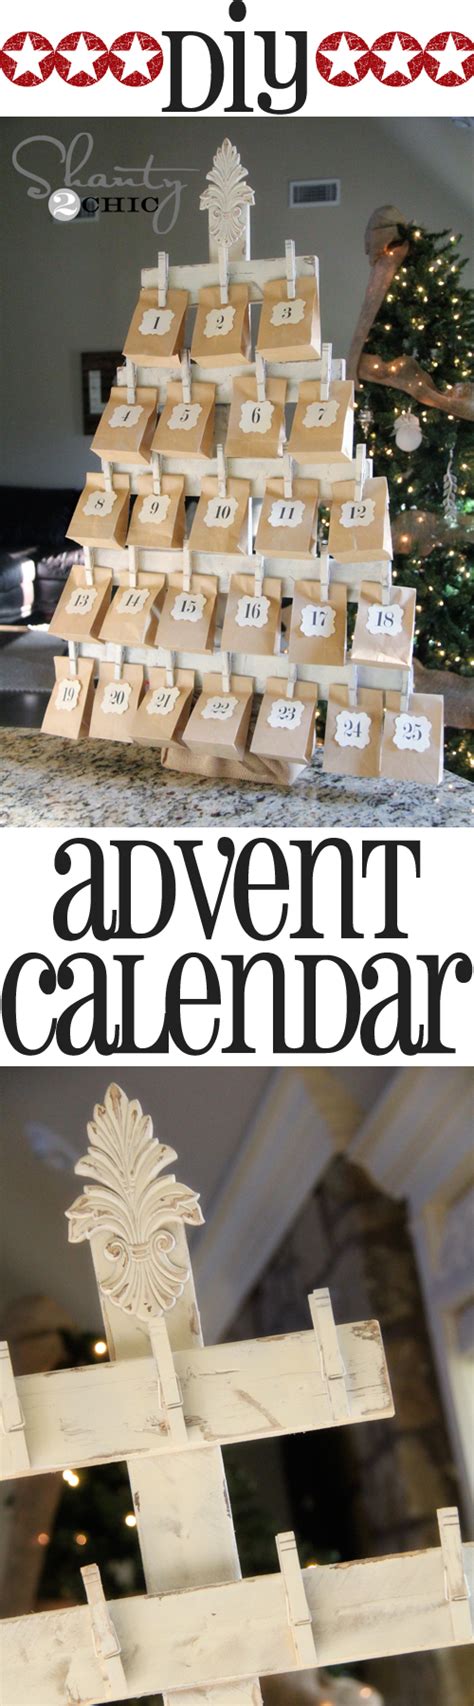 20 Diy Advent Calendar Ideas And Tutorials Styletic